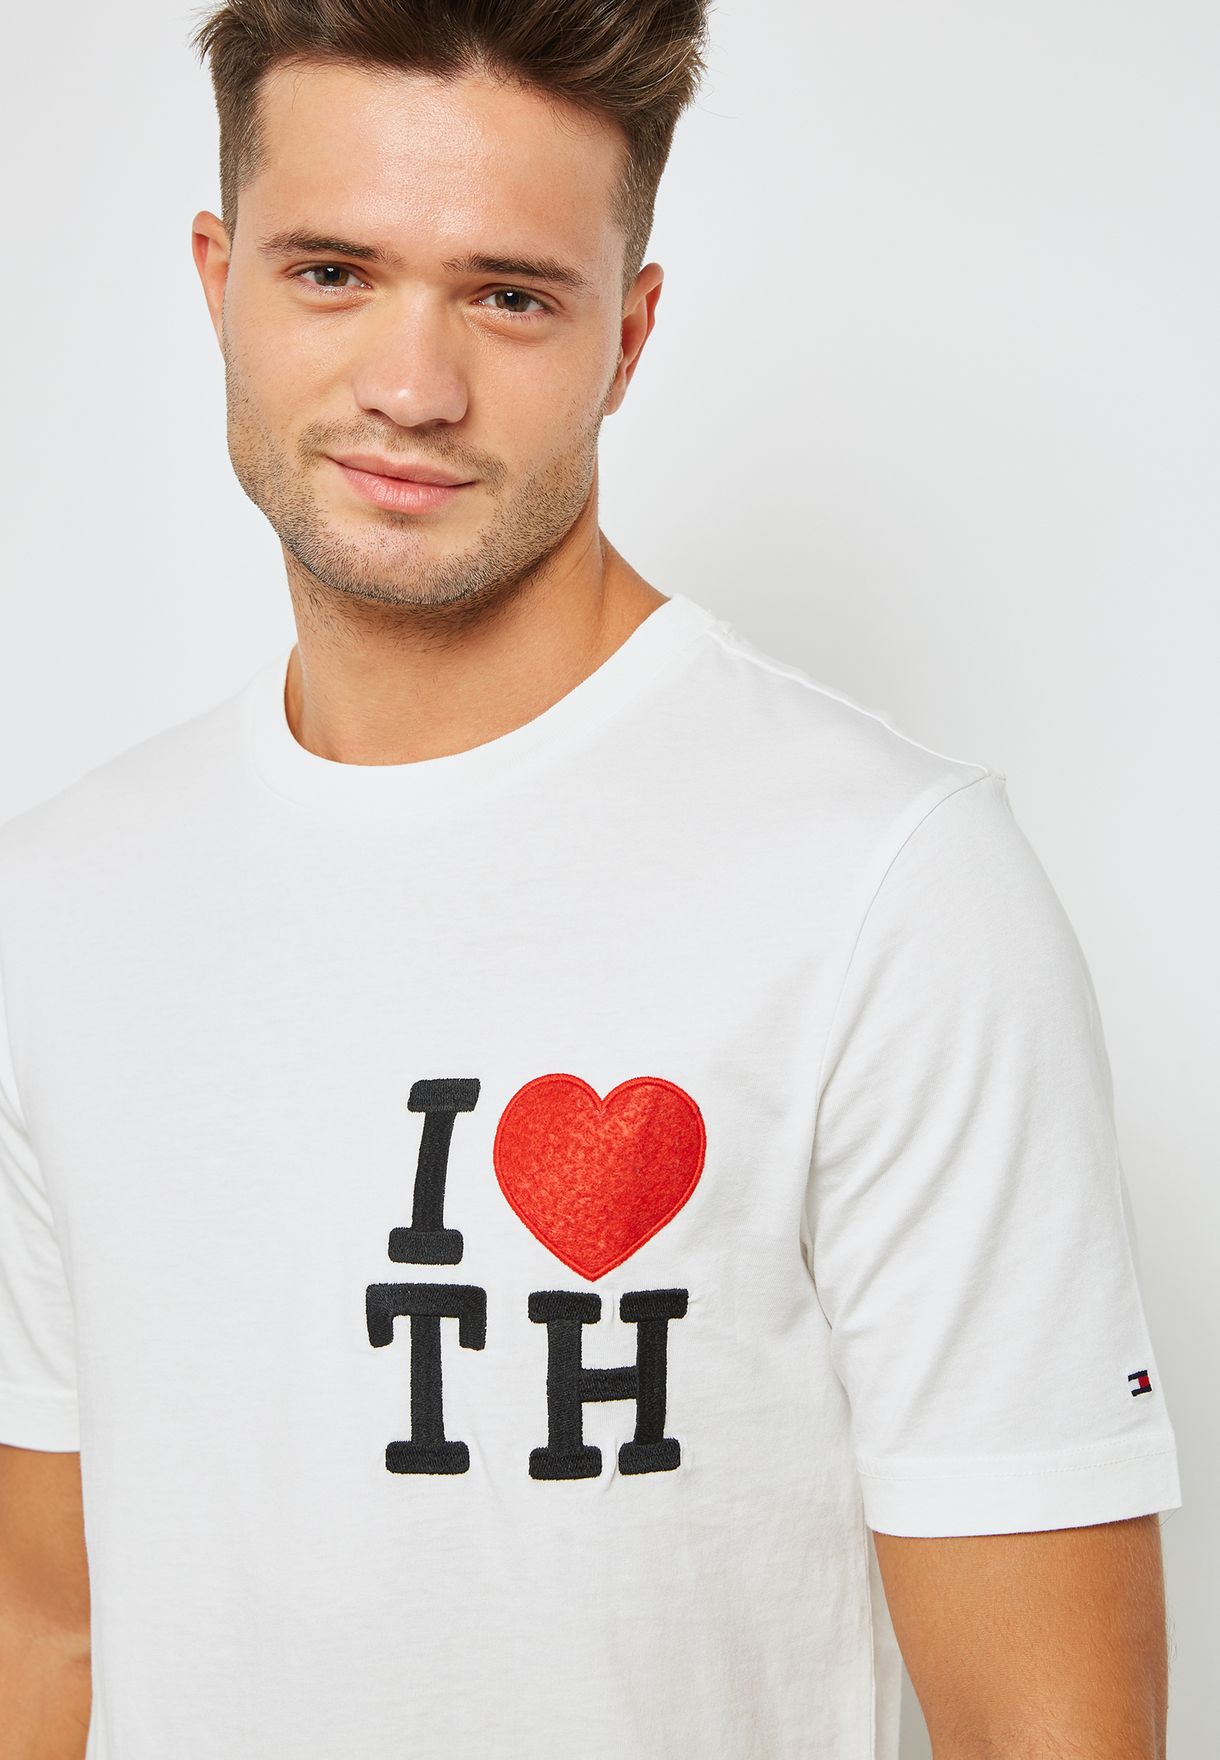 tommy hilfiger love t shirt